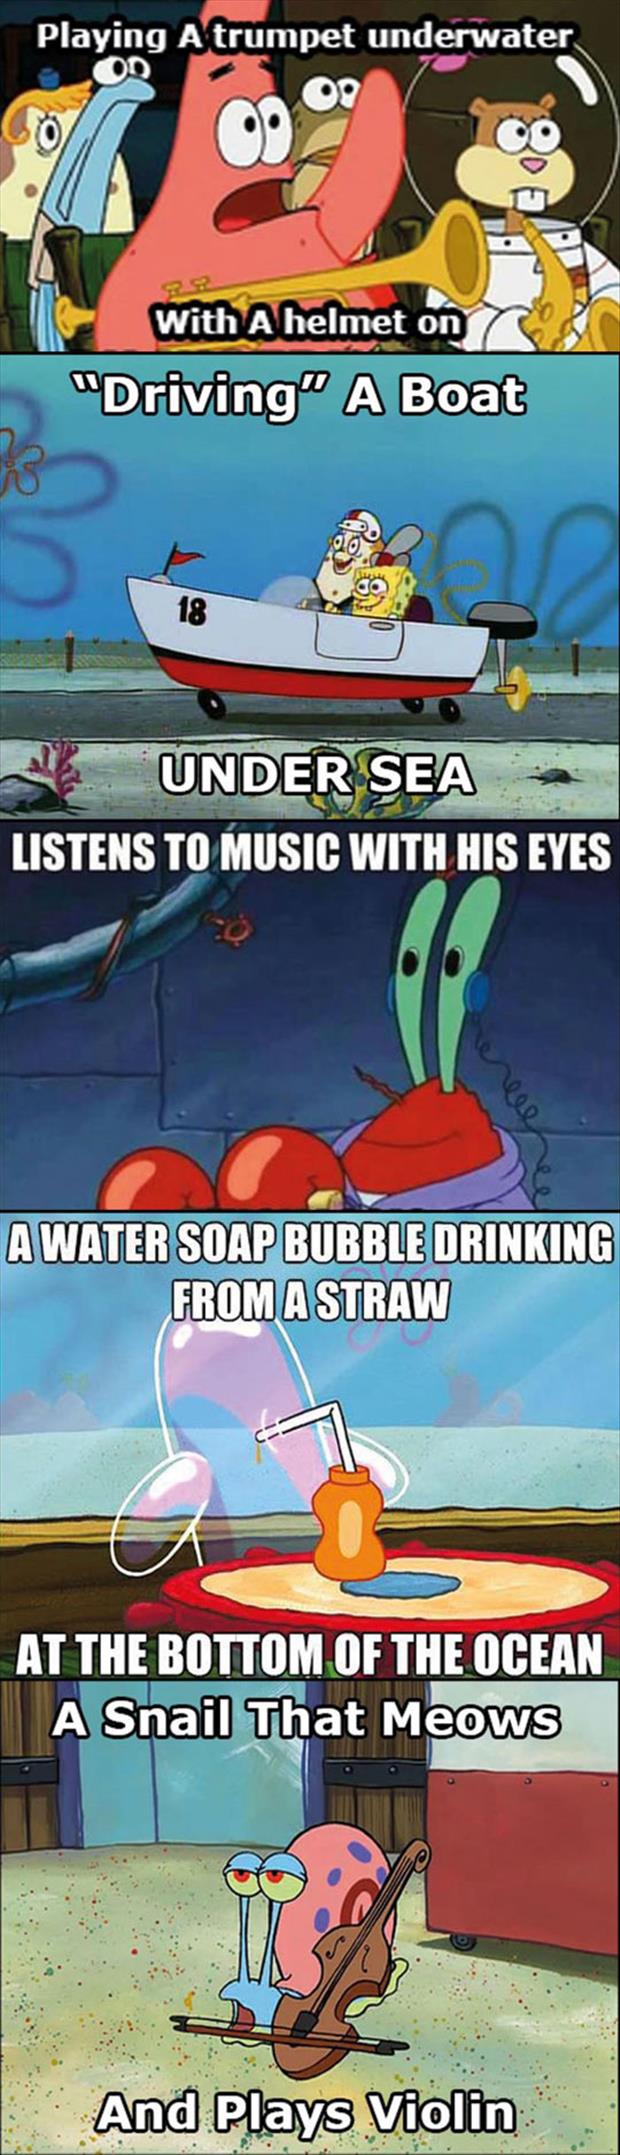 spongebob logic tumblr